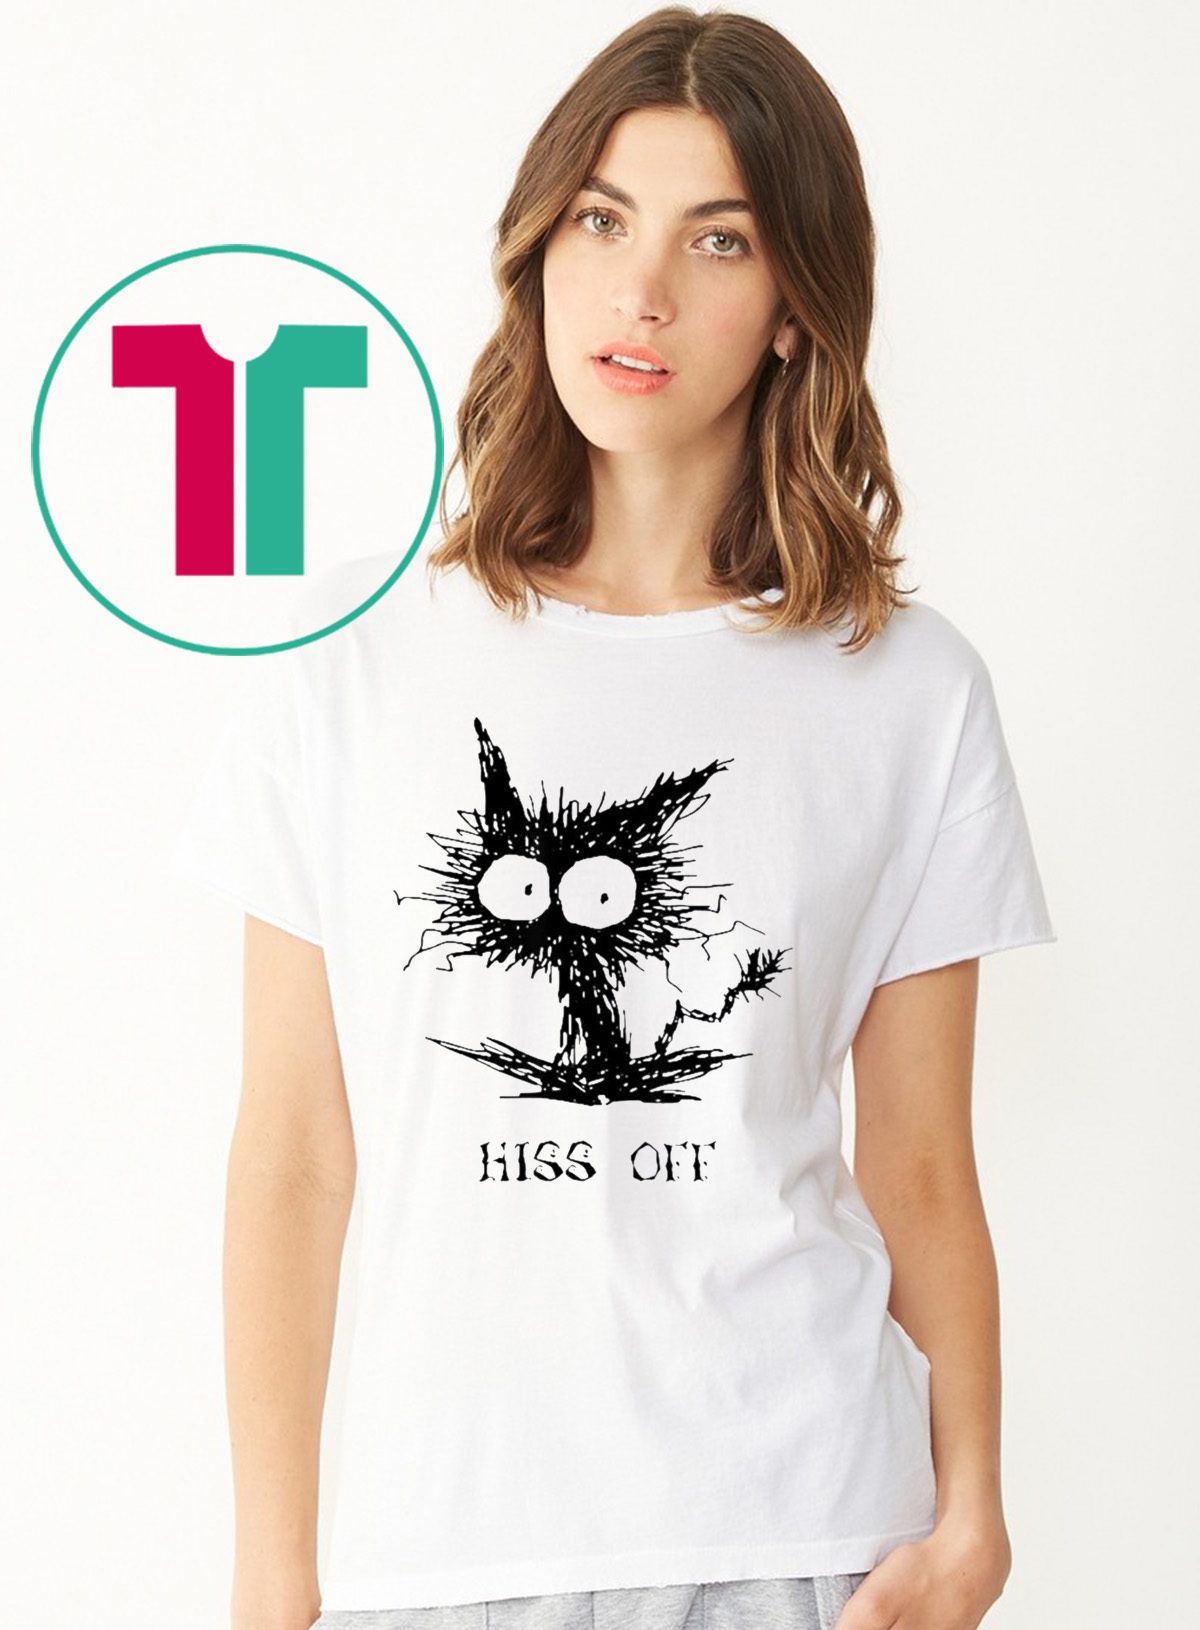 Hiss Off Black Cat Shirt - Reviewshirts Office